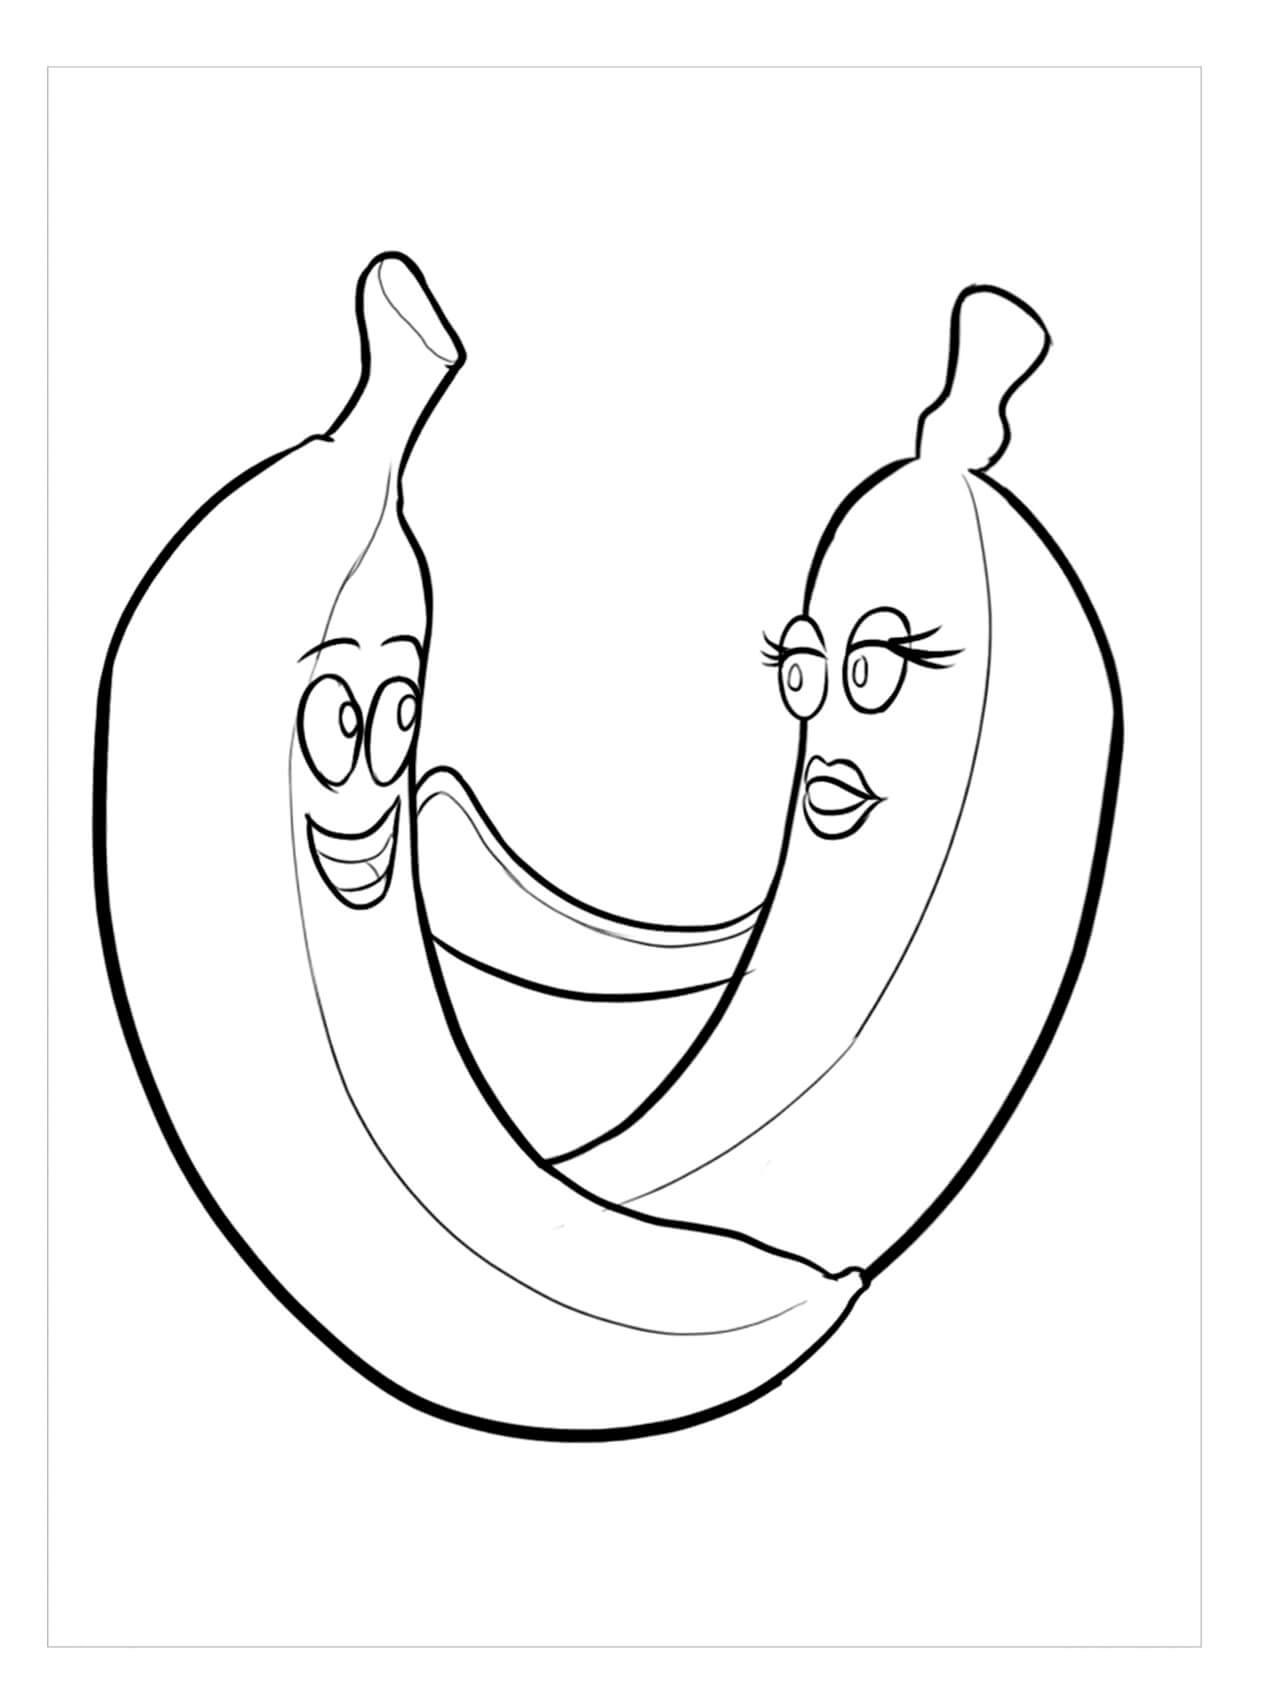 Dibujos de Divertido Plátano de dos Dibujos Animados para colorear